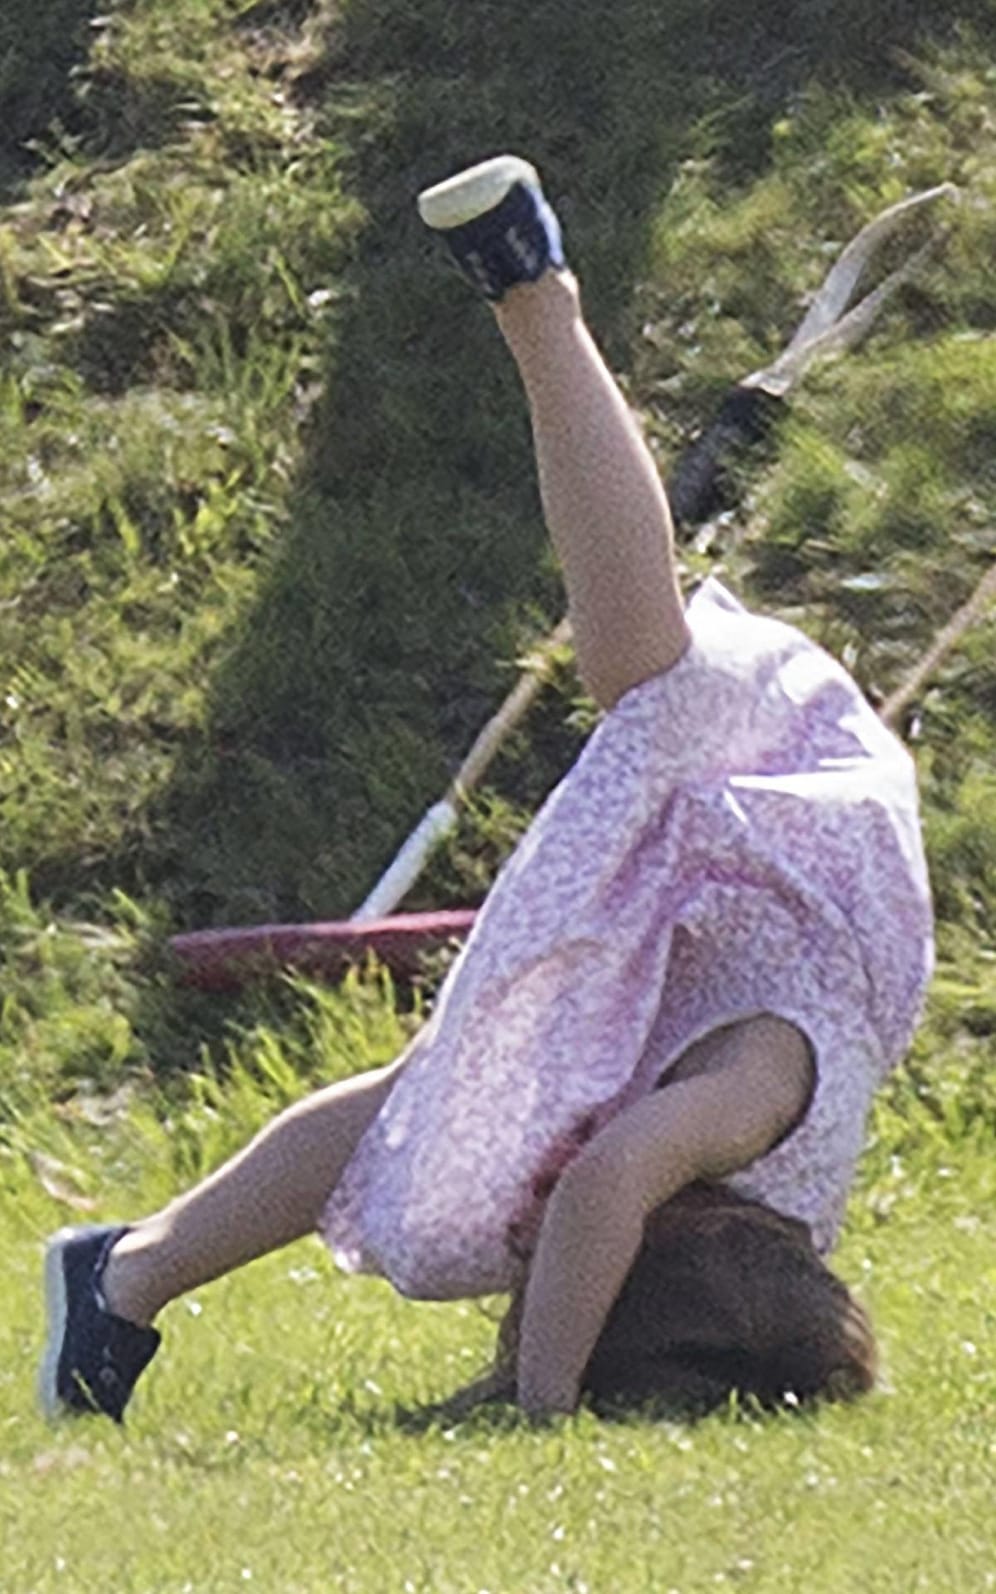 Prinzessin Charlotte im Juni 2018